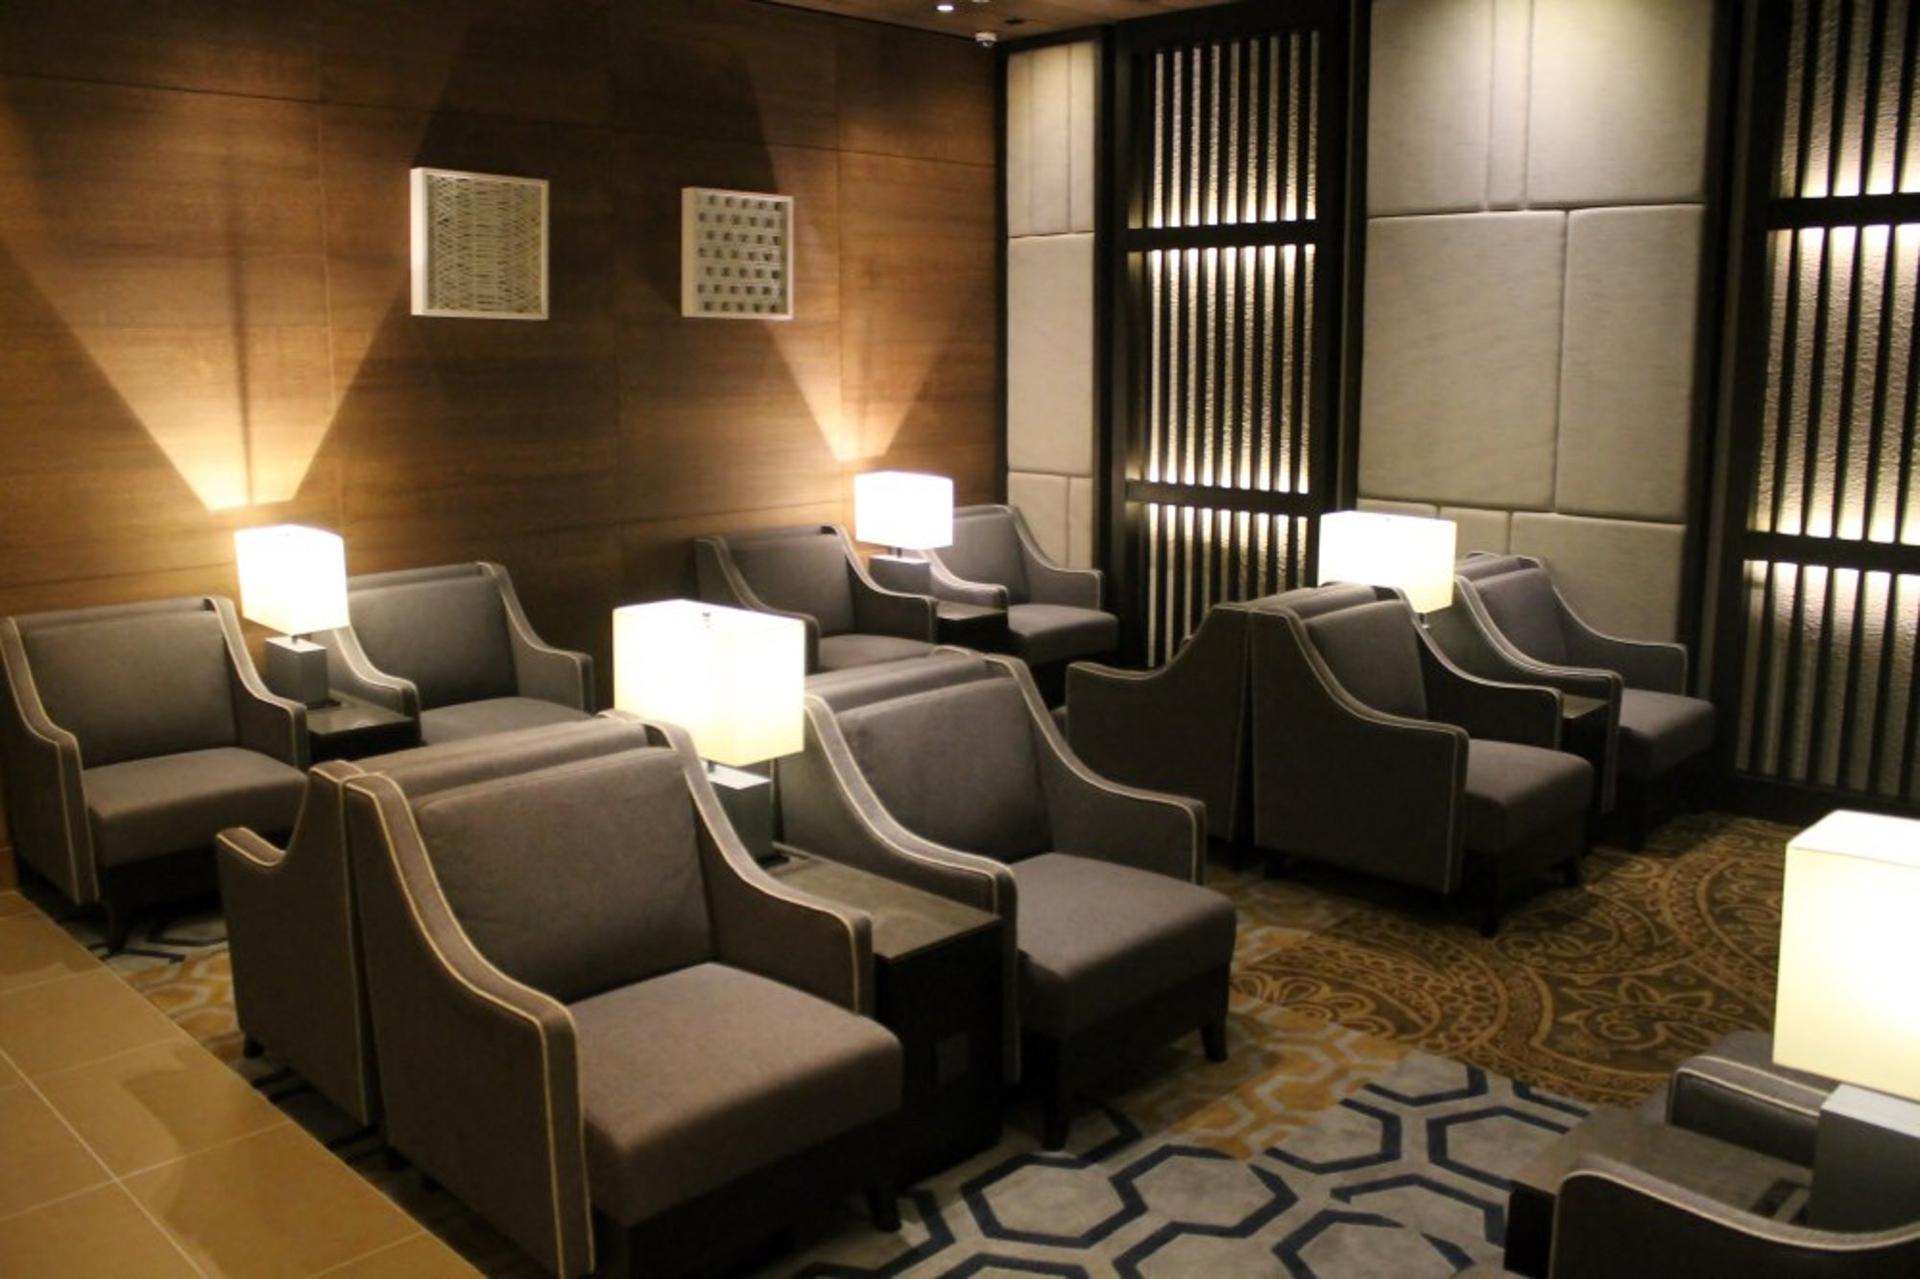 Plaza Premium Lounge image 3 of 73